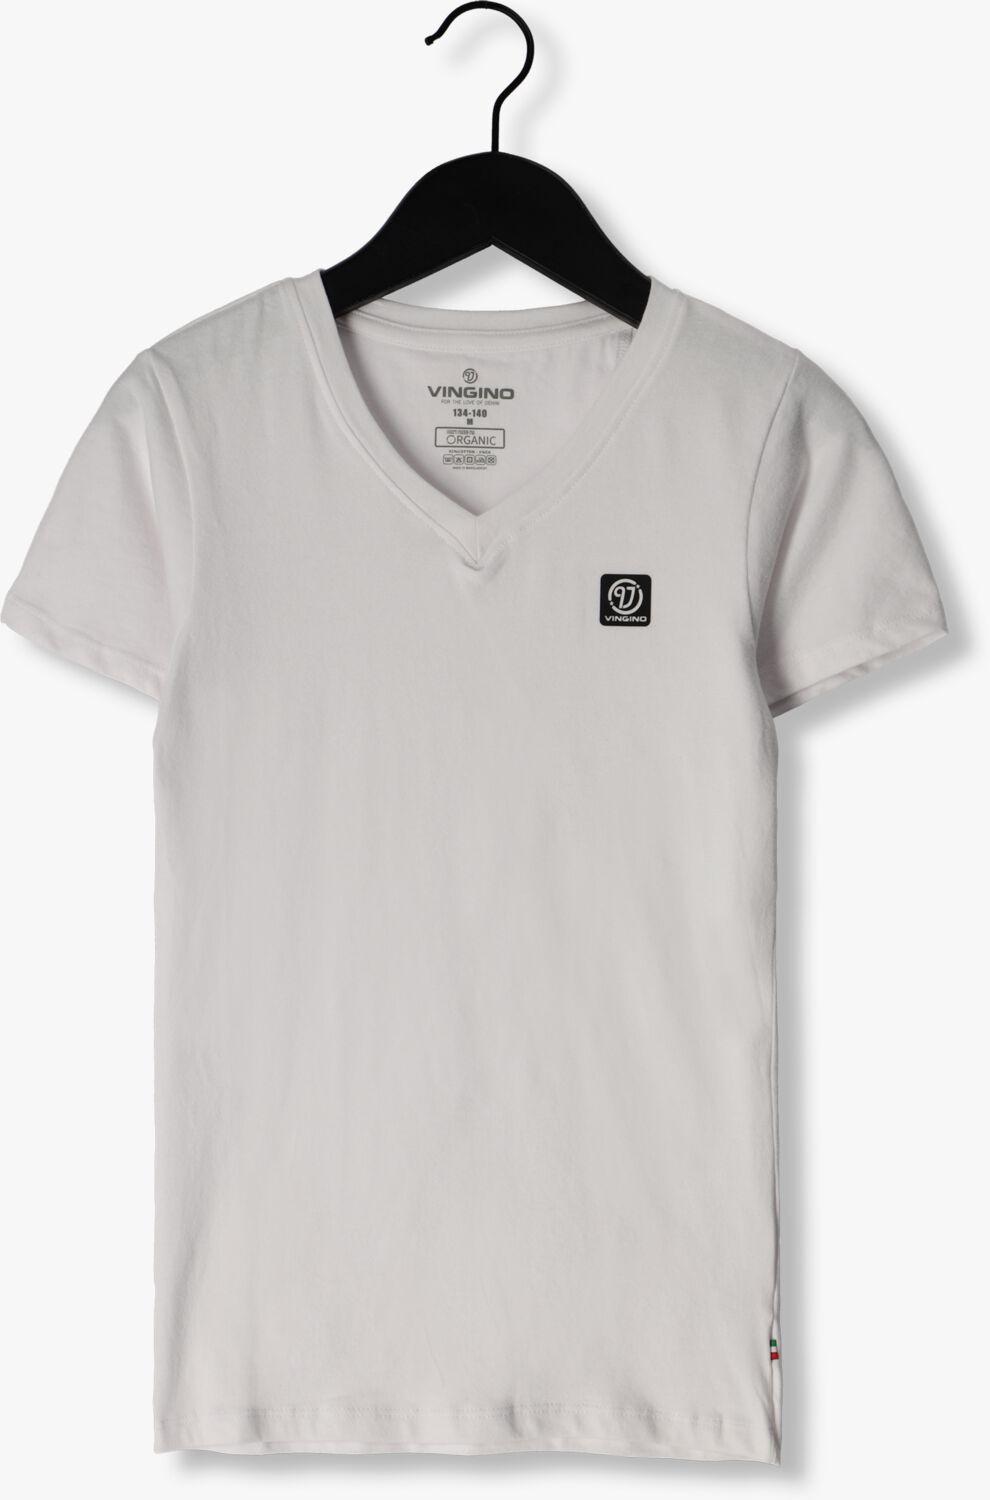 Monarchie Verhuizer Met name Witte VINGINO T-shirt B-BASIC-TEE-VNSS | Omoda